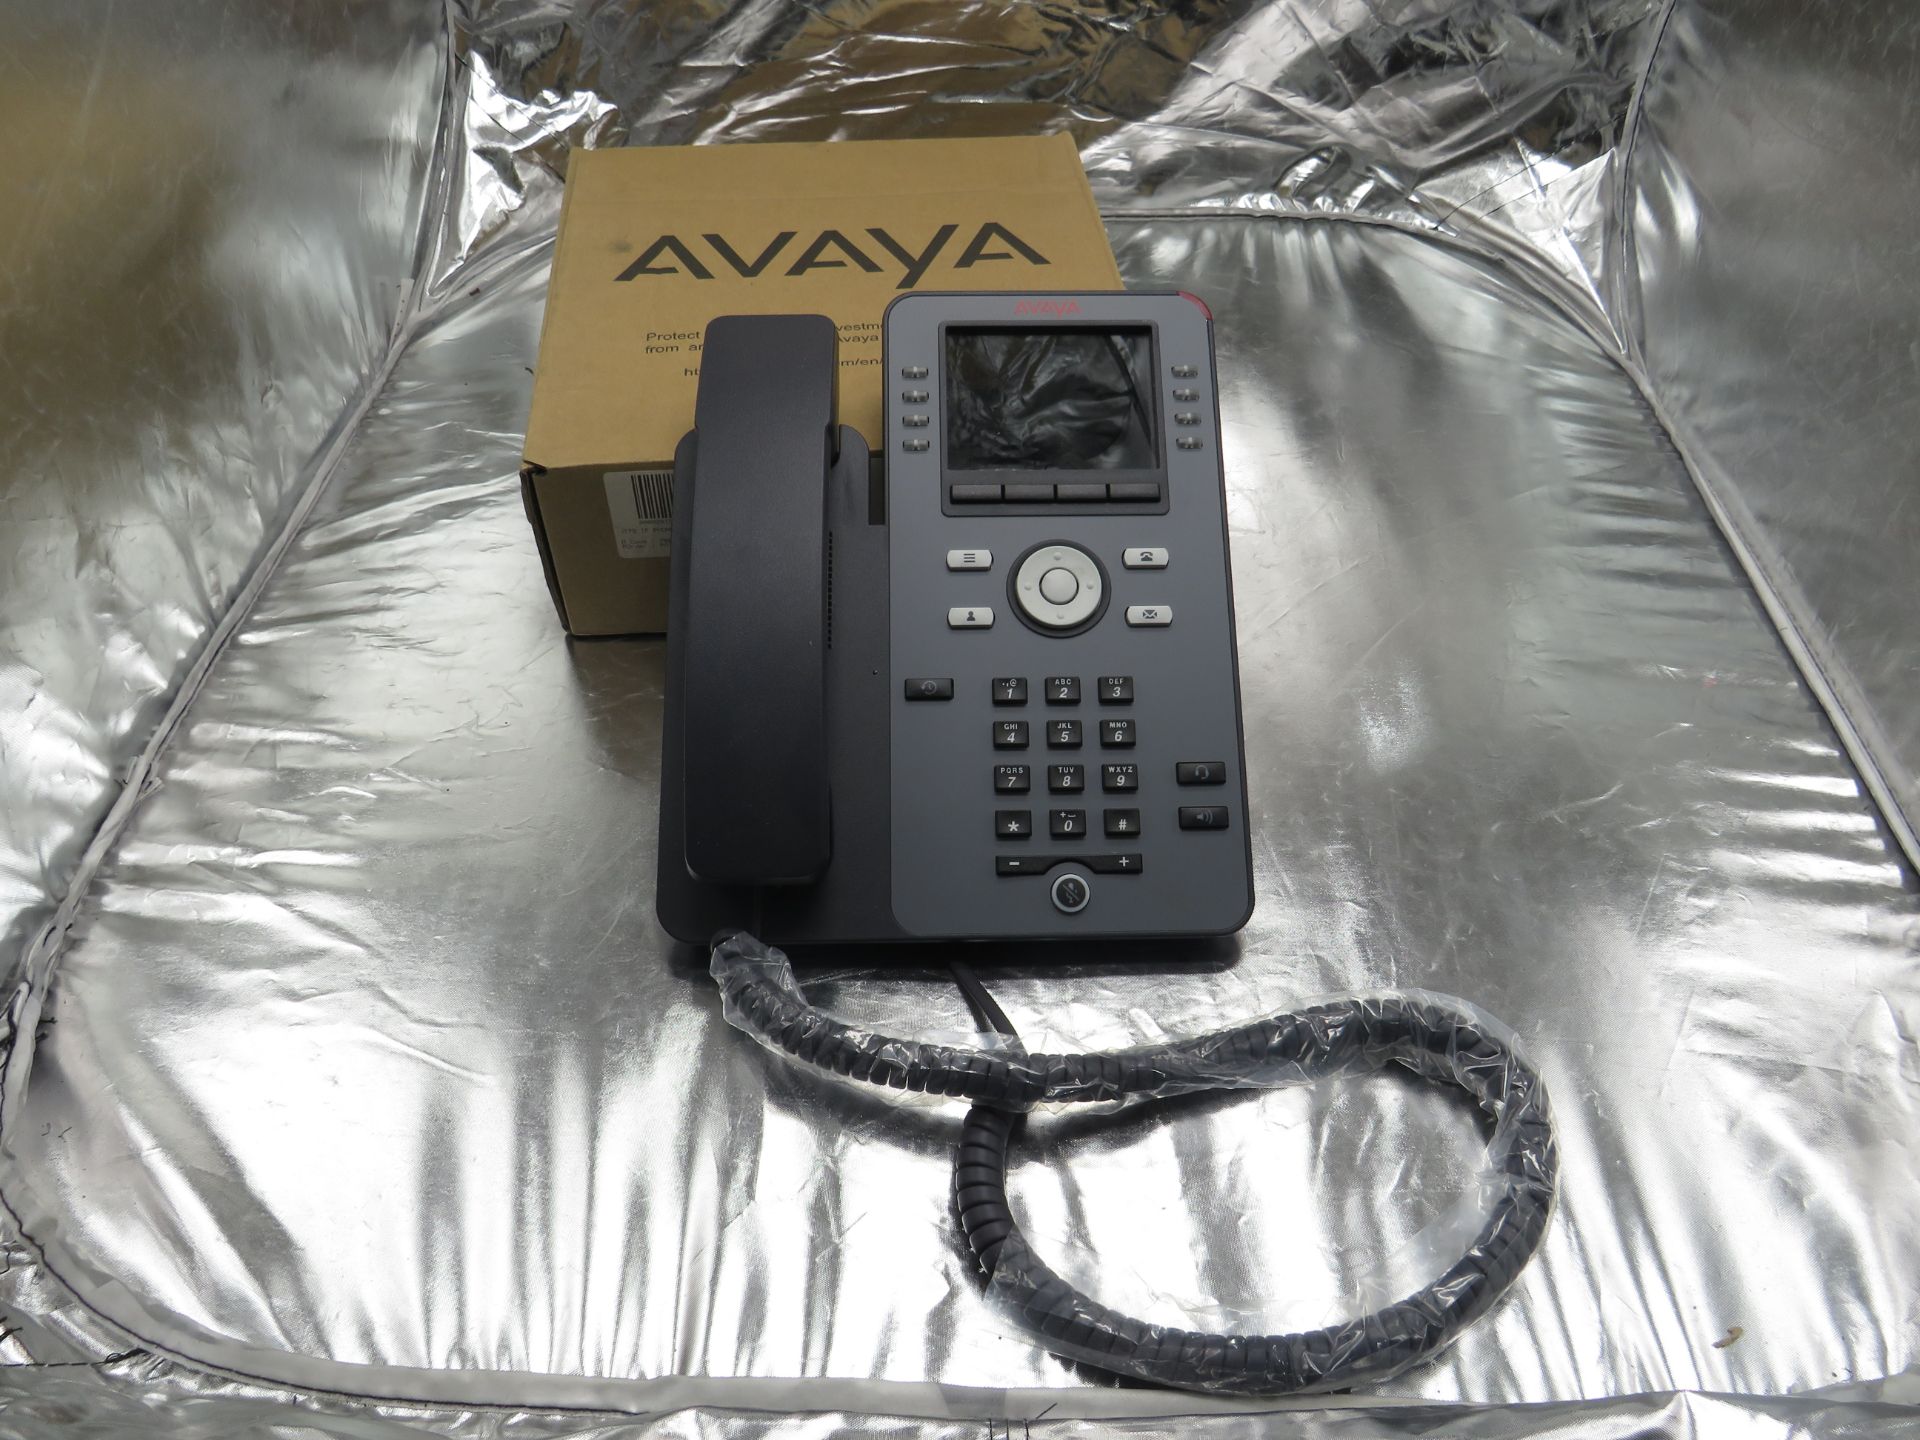 Avaya IP phone, new and boxed